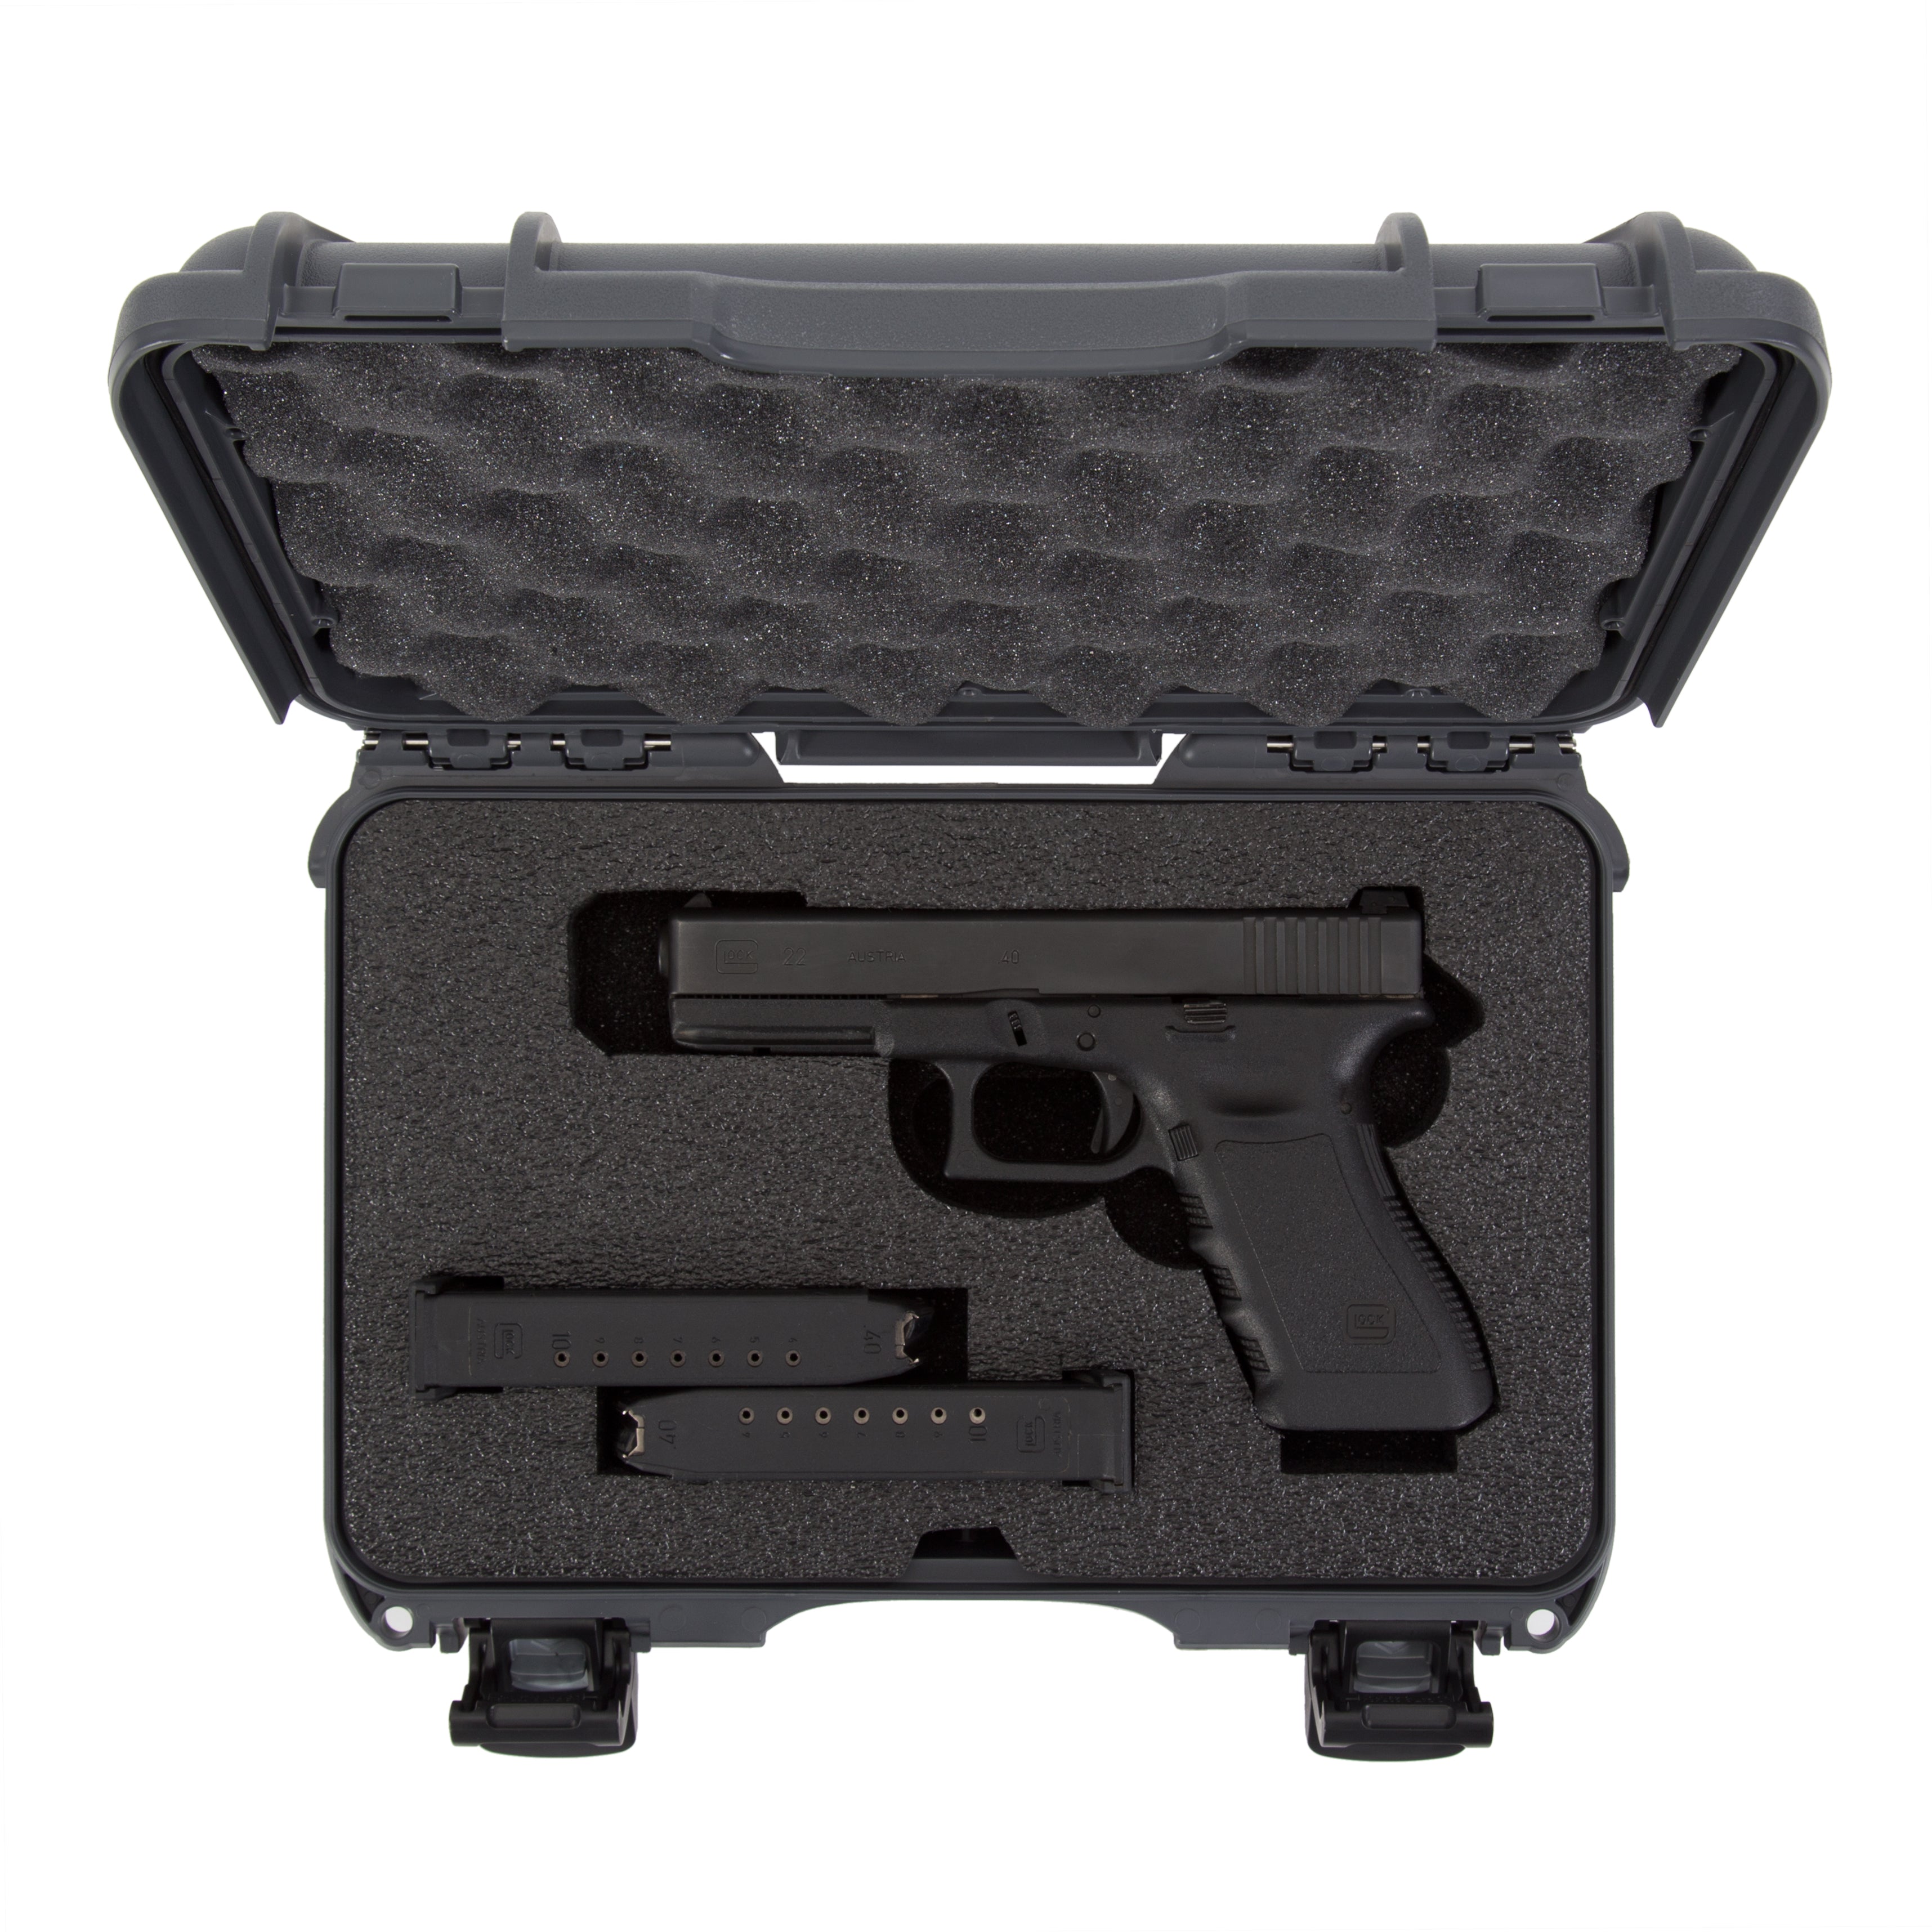 NANUK Gun valises  Boutique en ligne officielle NANUK Protective Gun valise  - Waterproof & Indestructible Hard valise - NANUK Canada